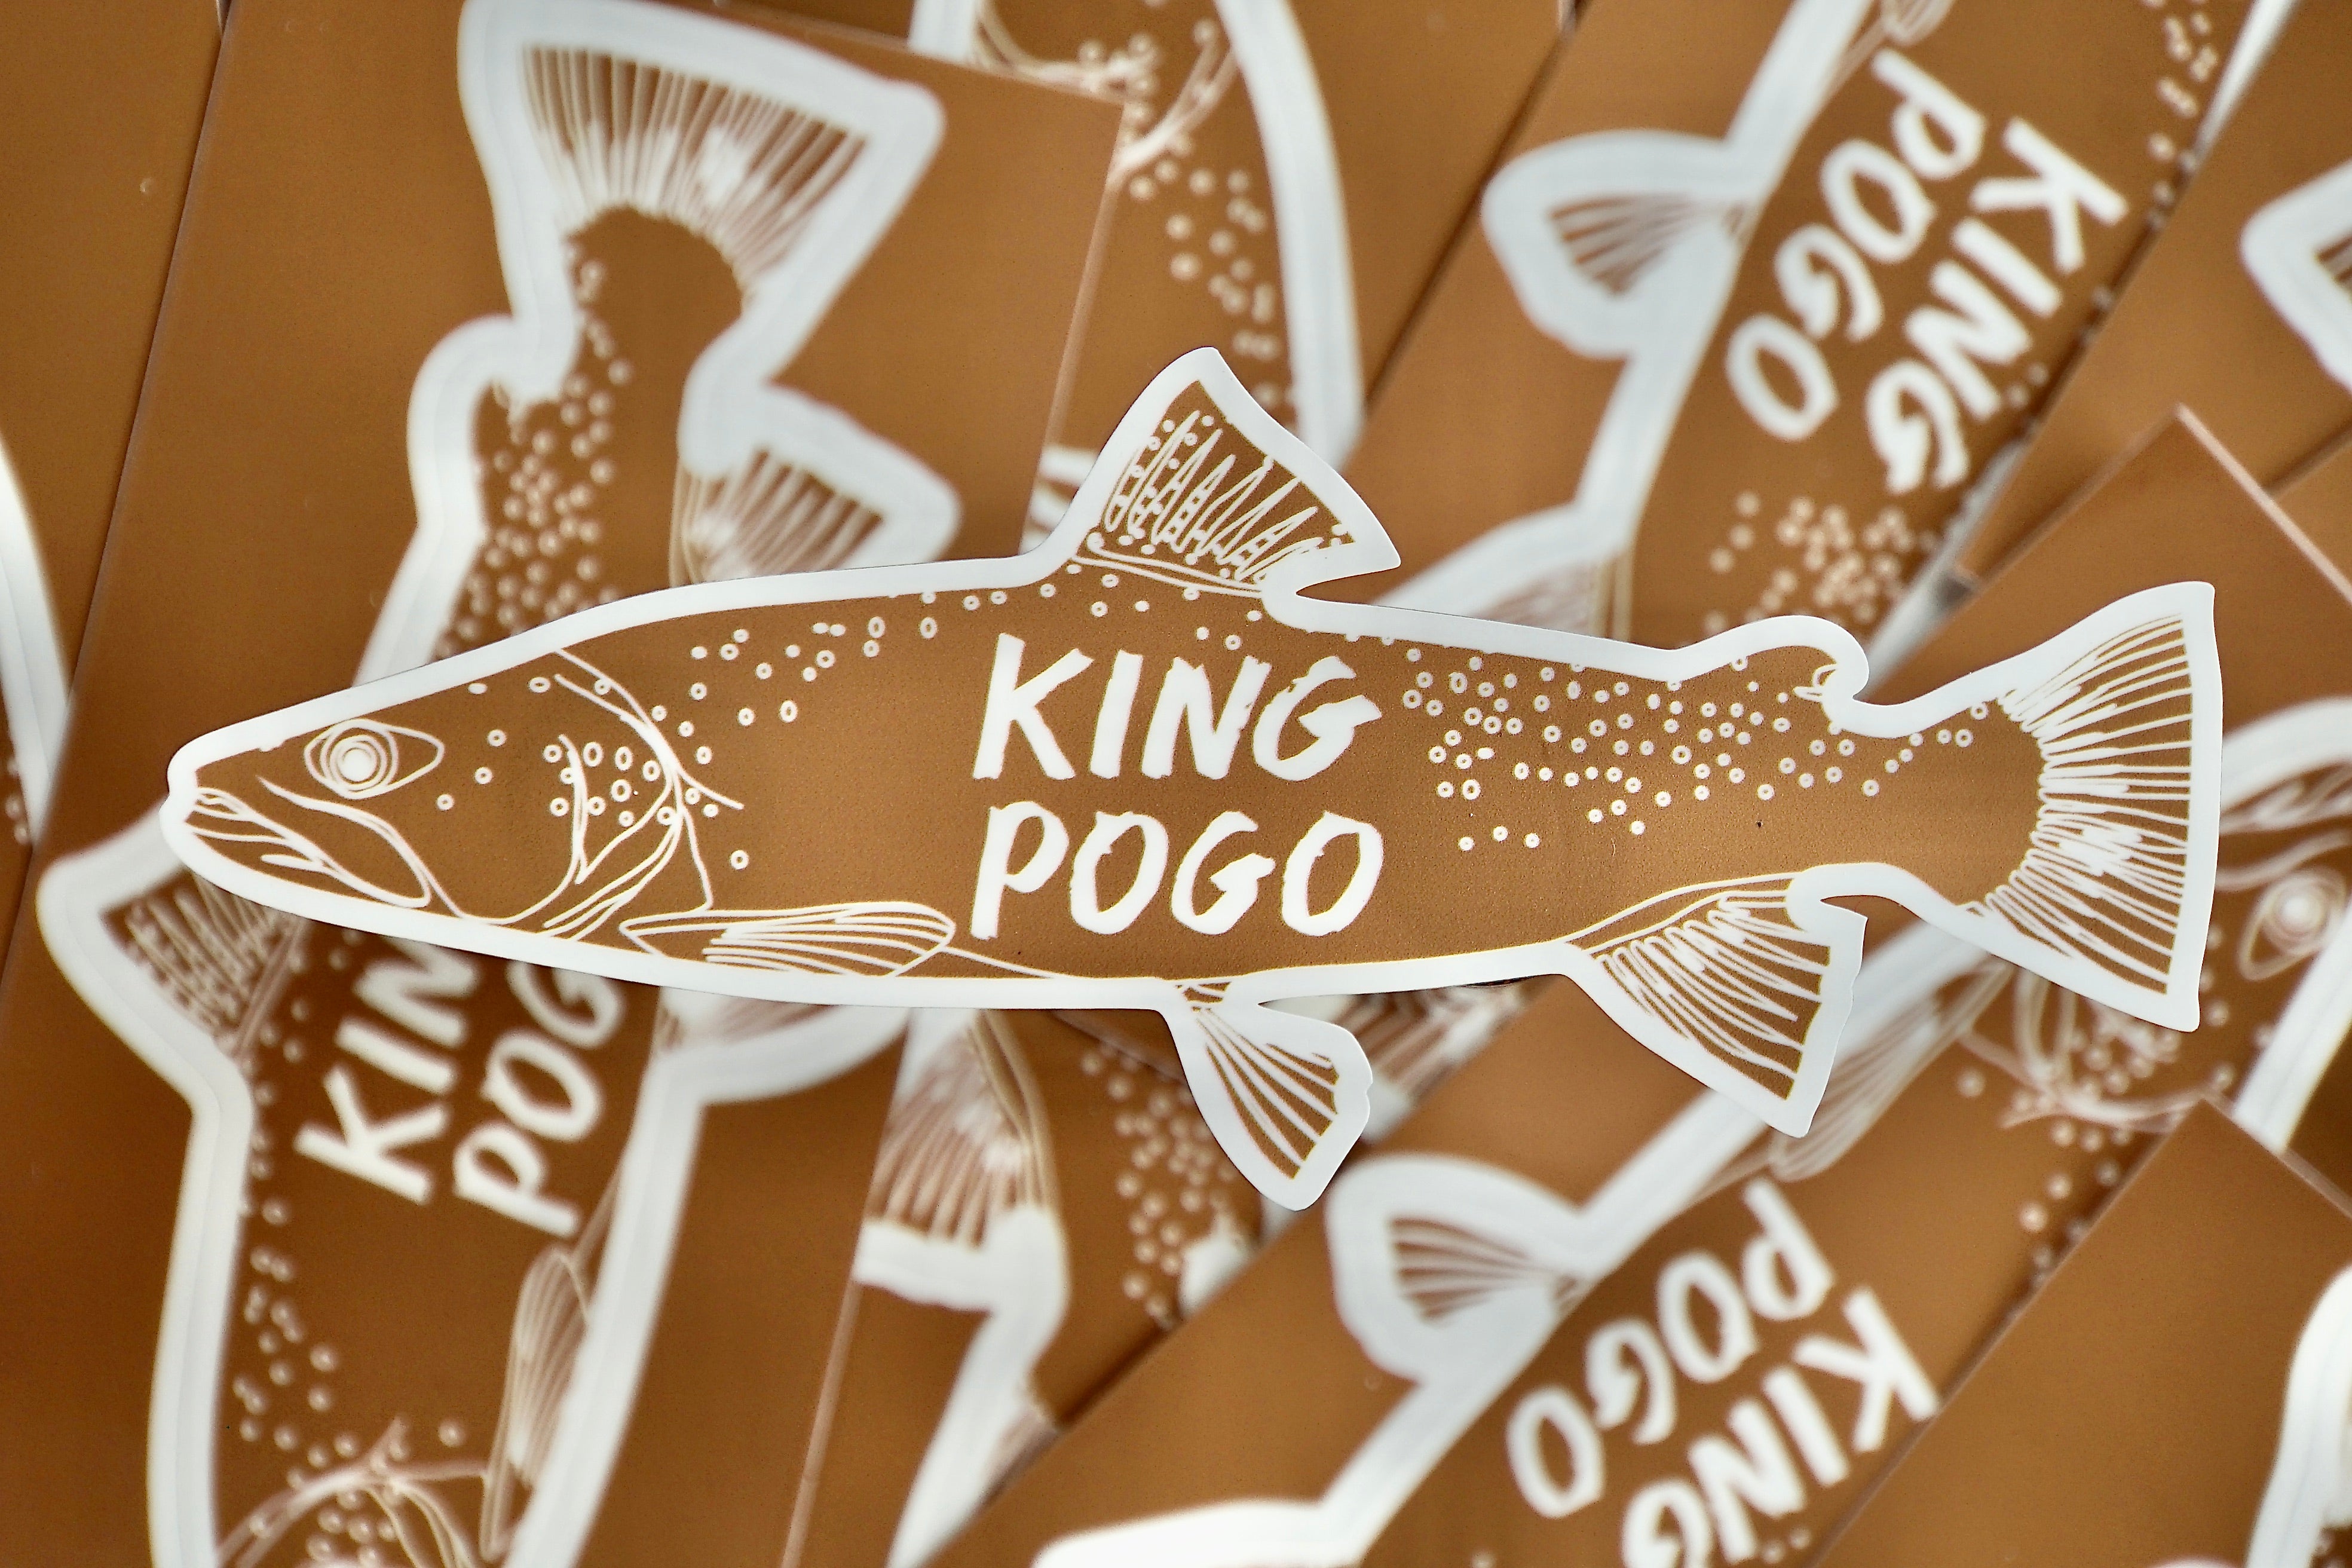 King Pogo